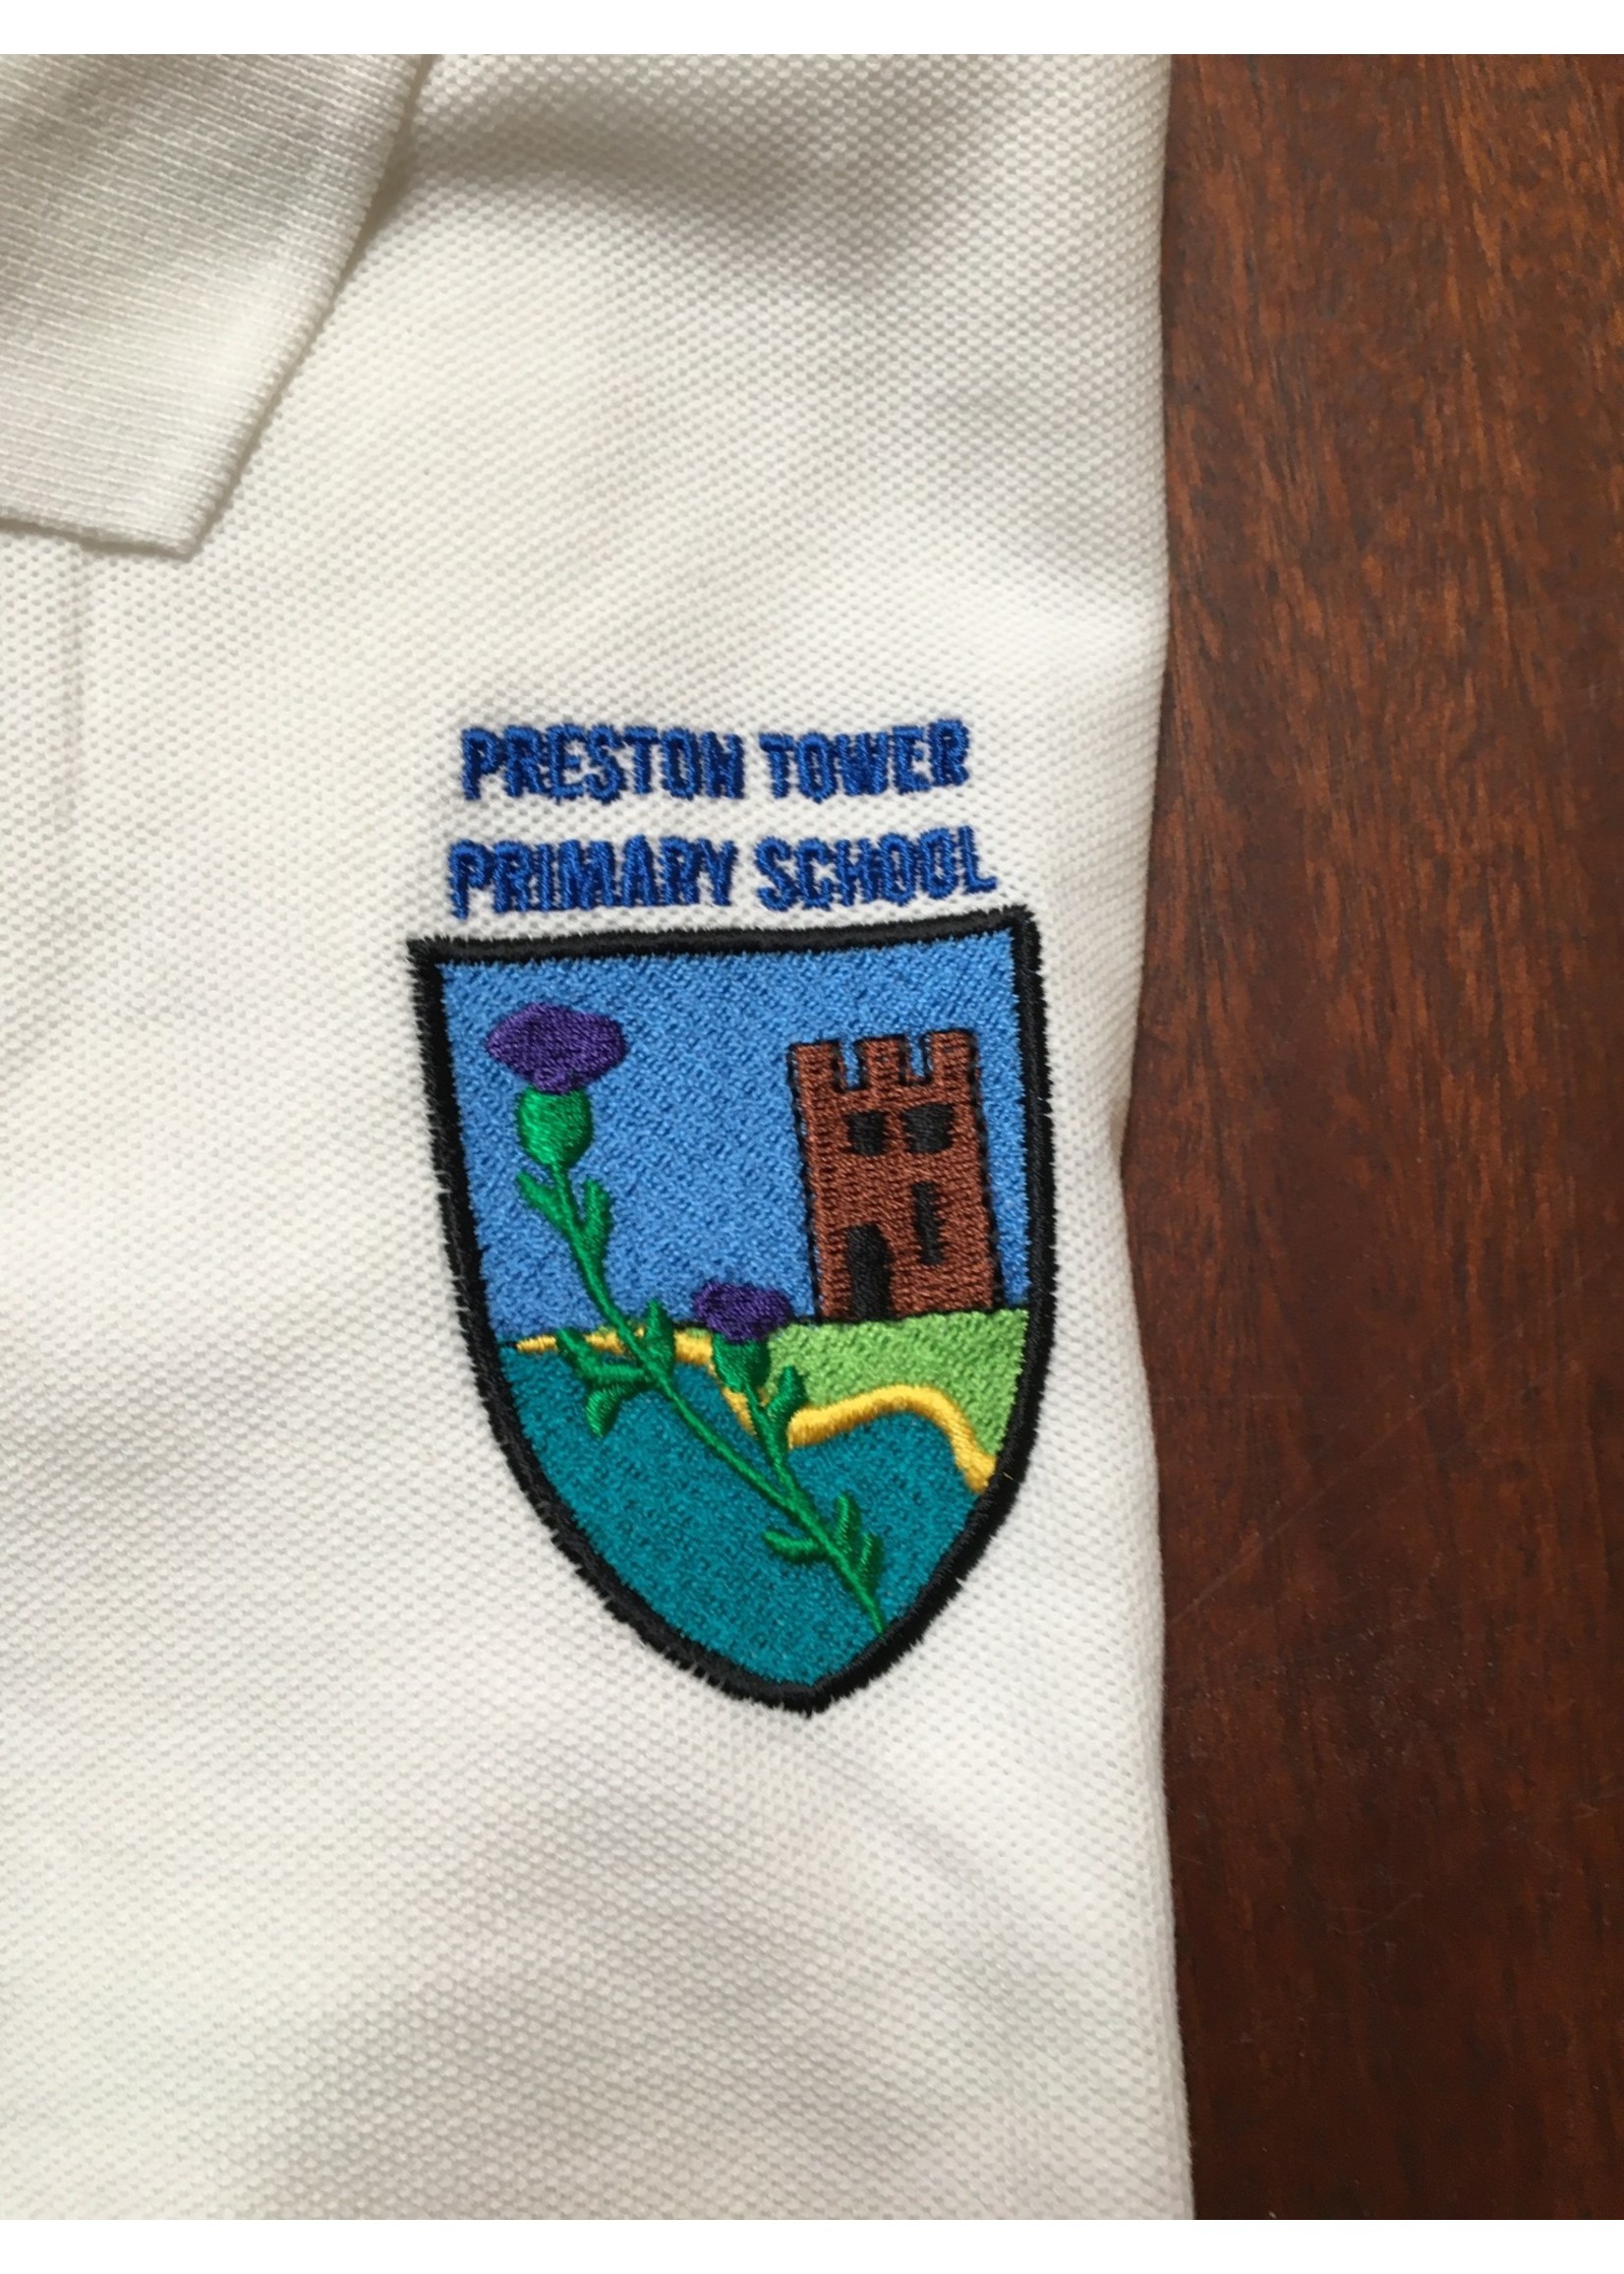 School Uniform - POLO SHIRT - PRESTON TOWER